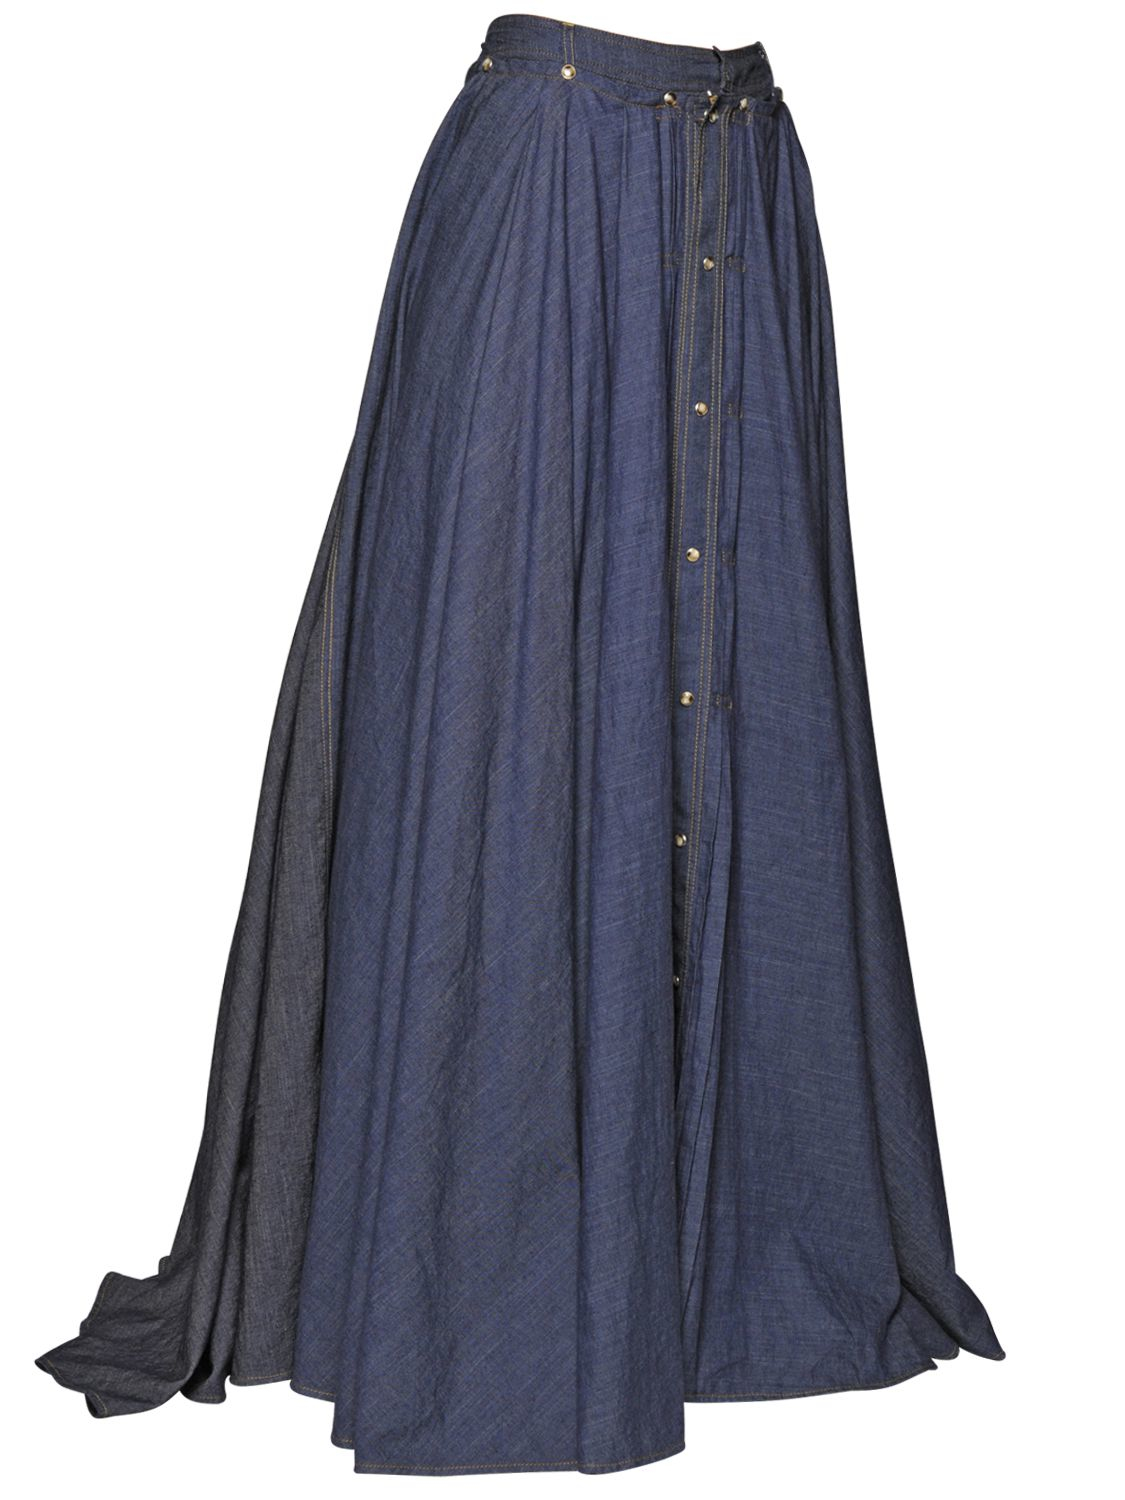 Faith Connexion Cotton Denim Shorts & Long Skirt in Blue - Lyst